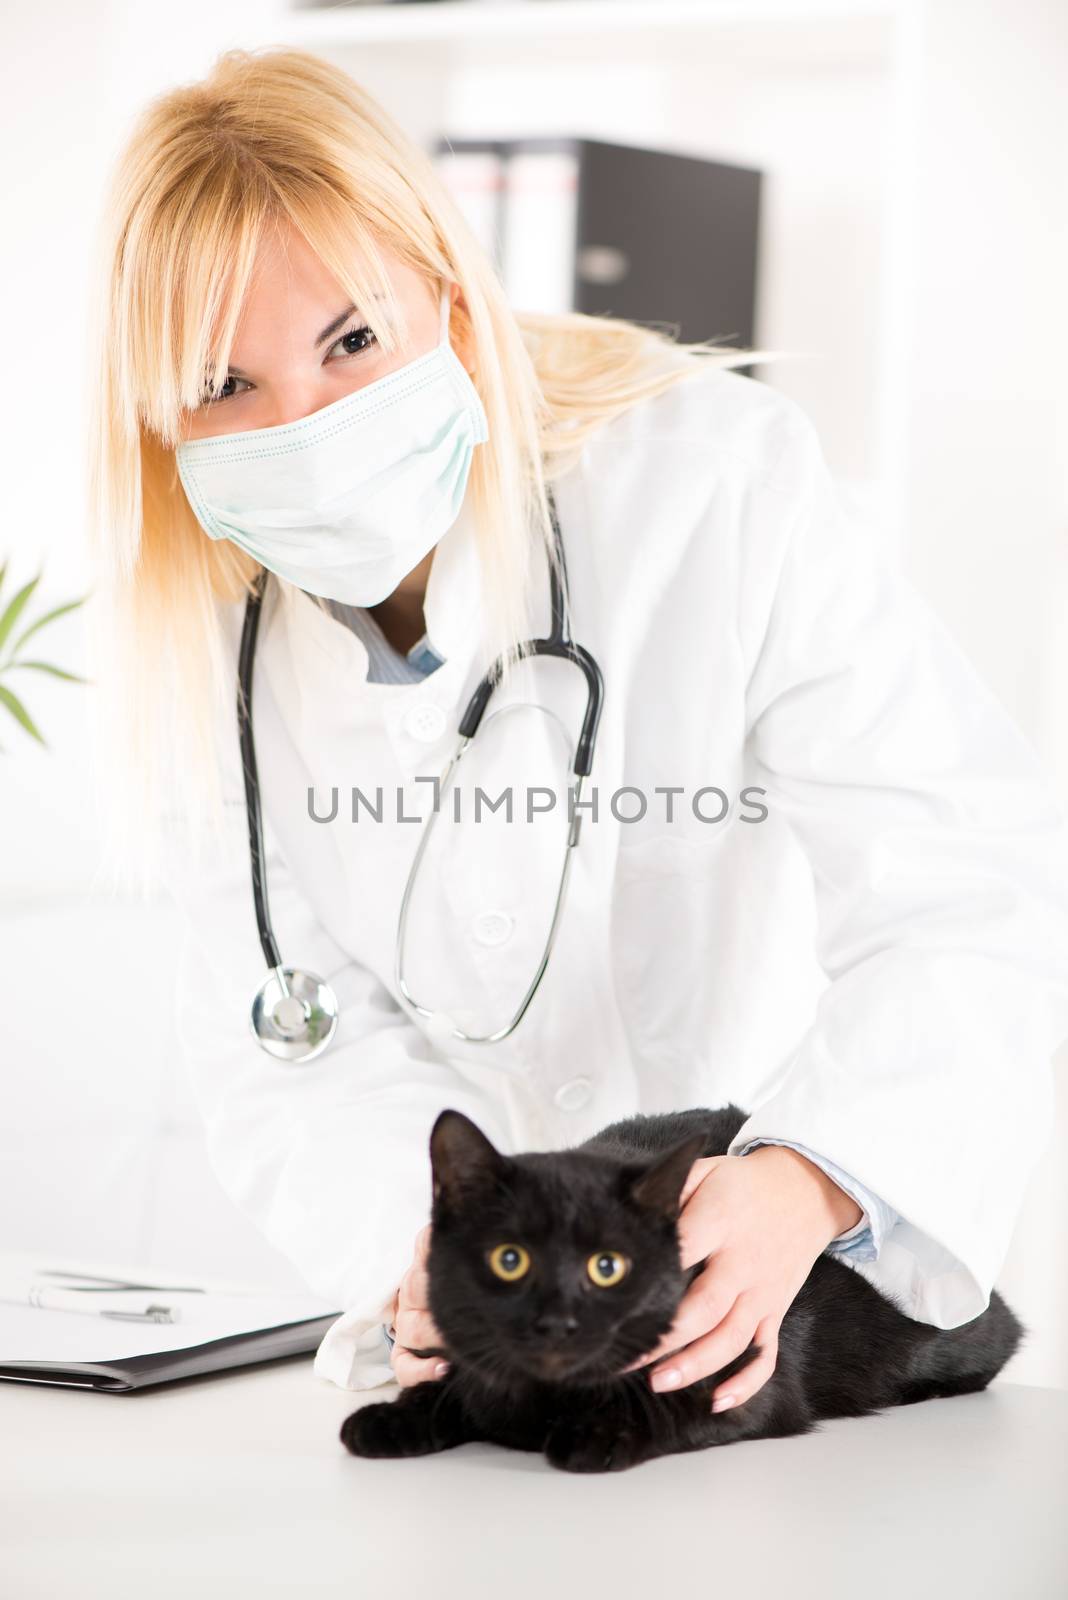 Veterinarian Examining A Domestic Cat by MilanMarkovic78